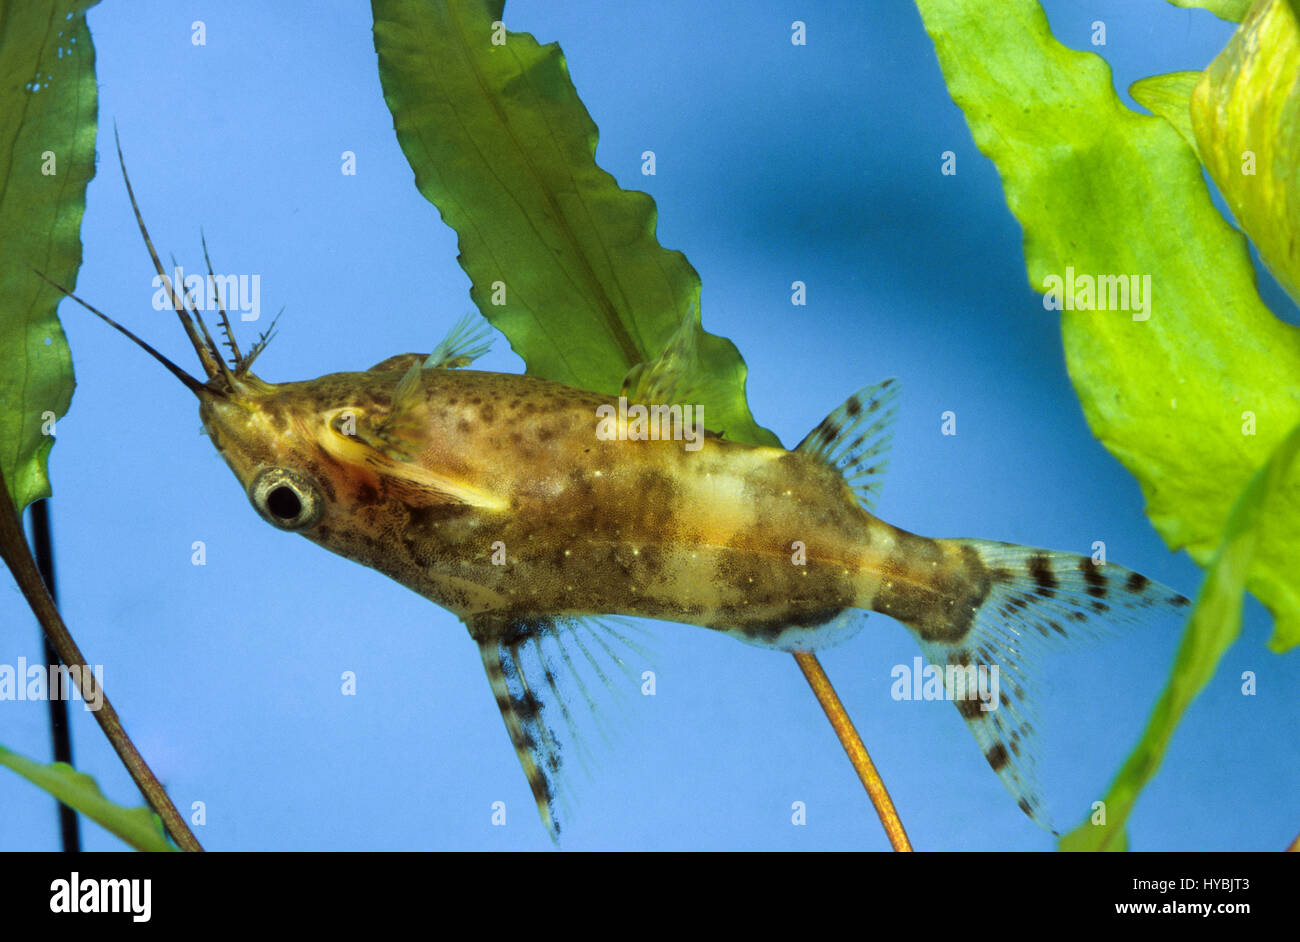 Rückenschwimmender Kongowels, Synodontis nigriventris, blotched upside-down catfish, upside down catfish Stock Photo